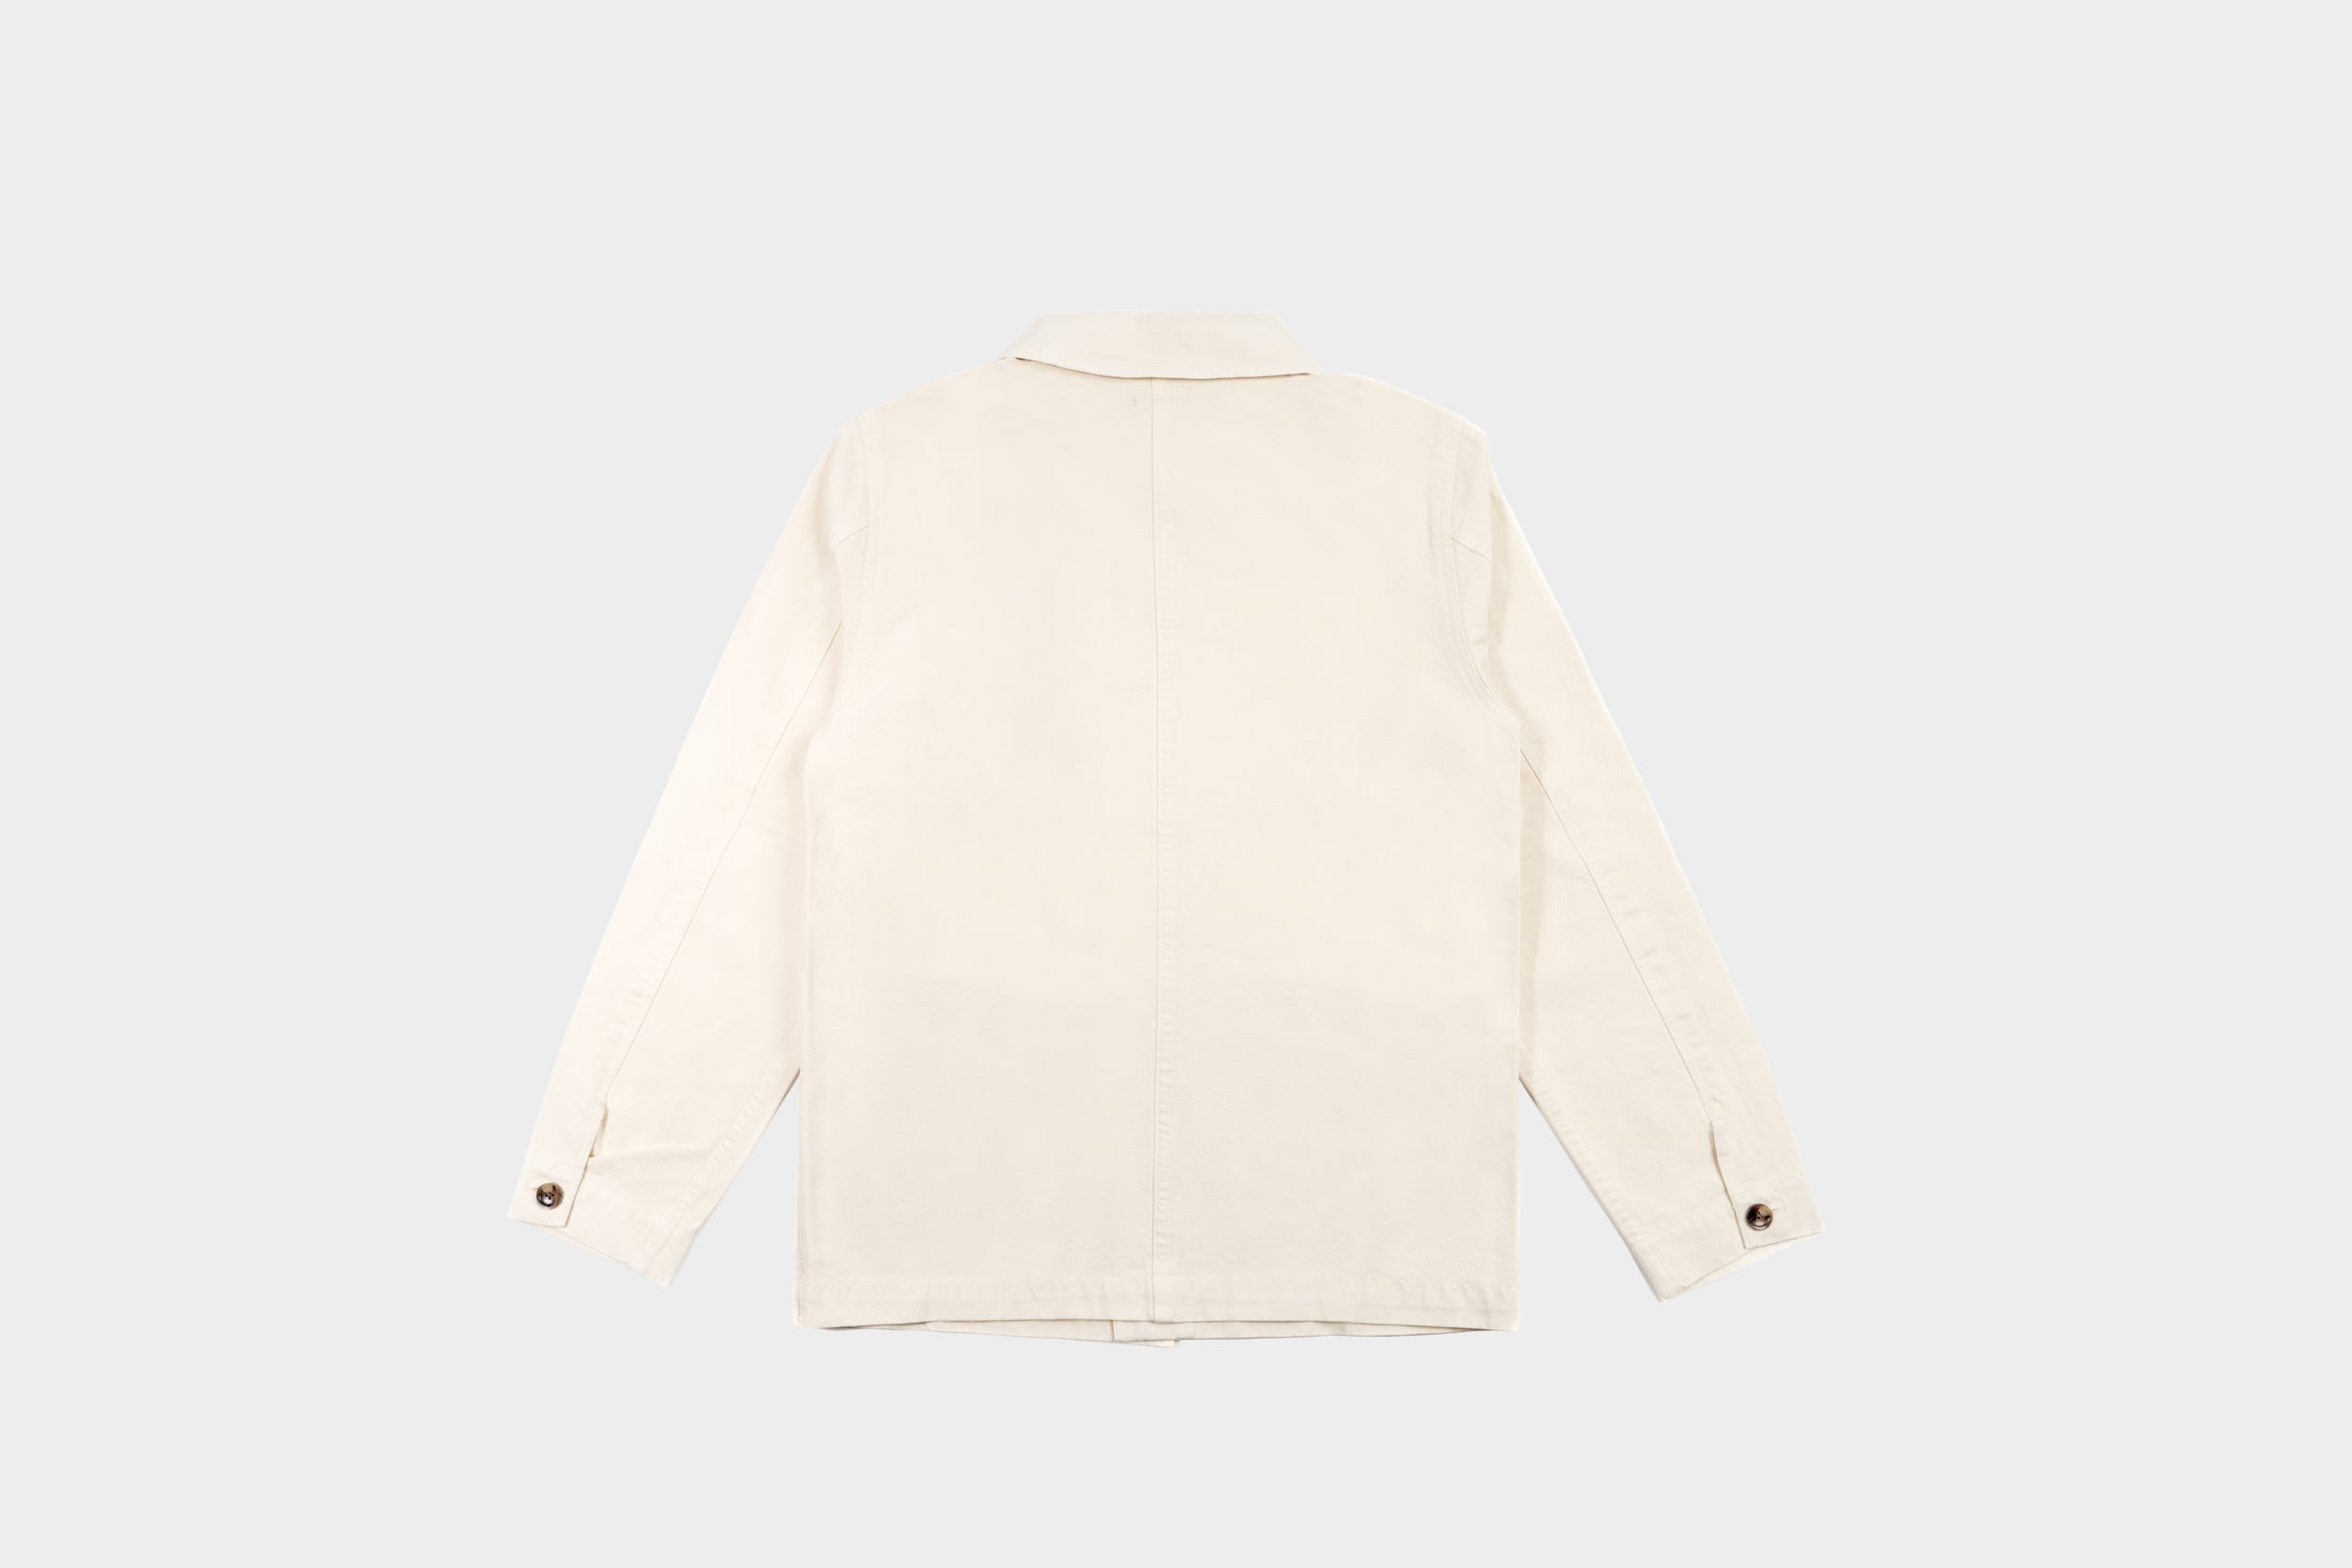 Terra Kaffe | The back of a cream-colored jacket